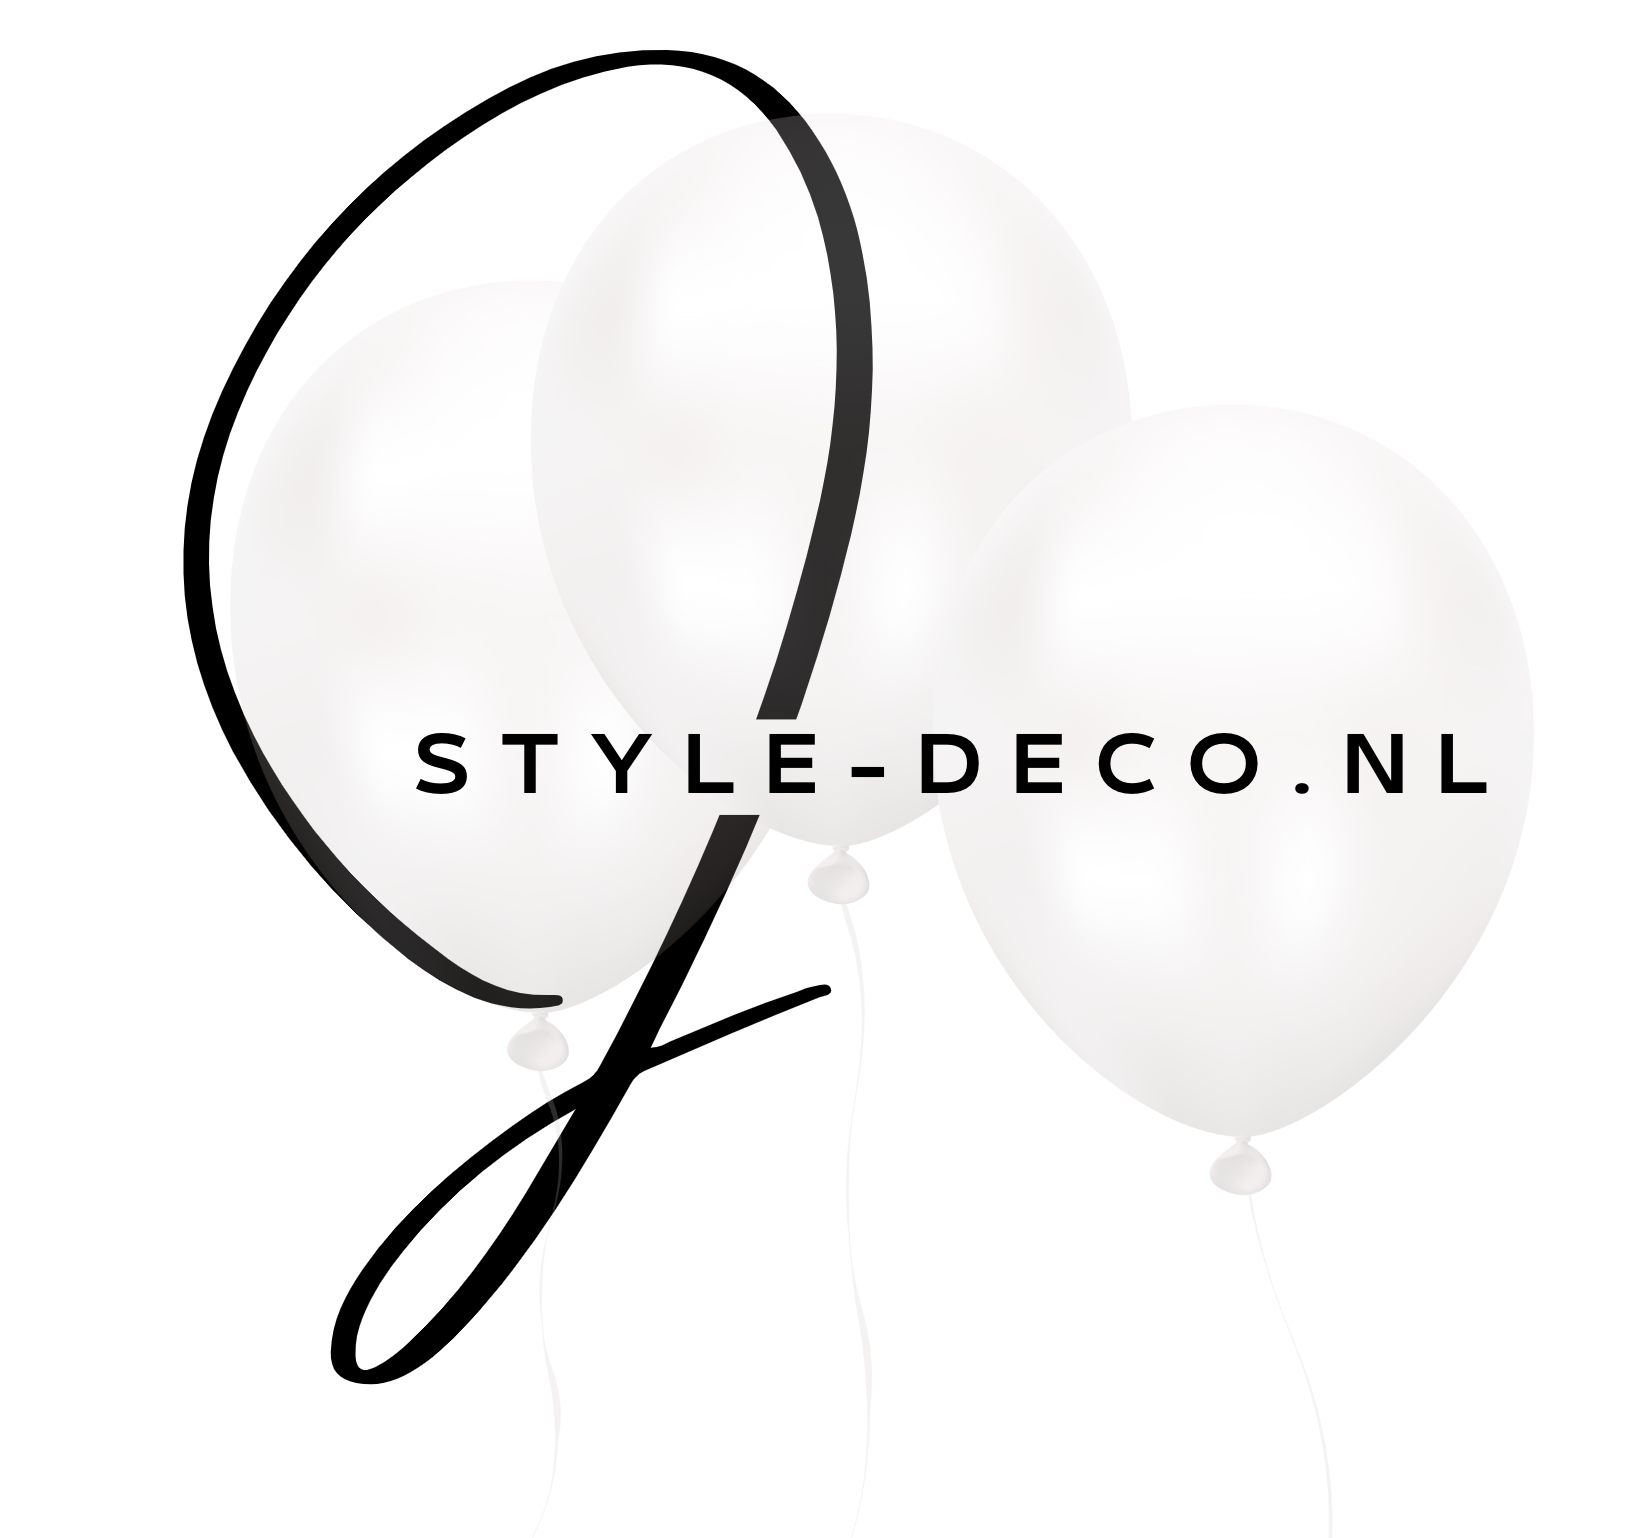 J-style-deco.nl